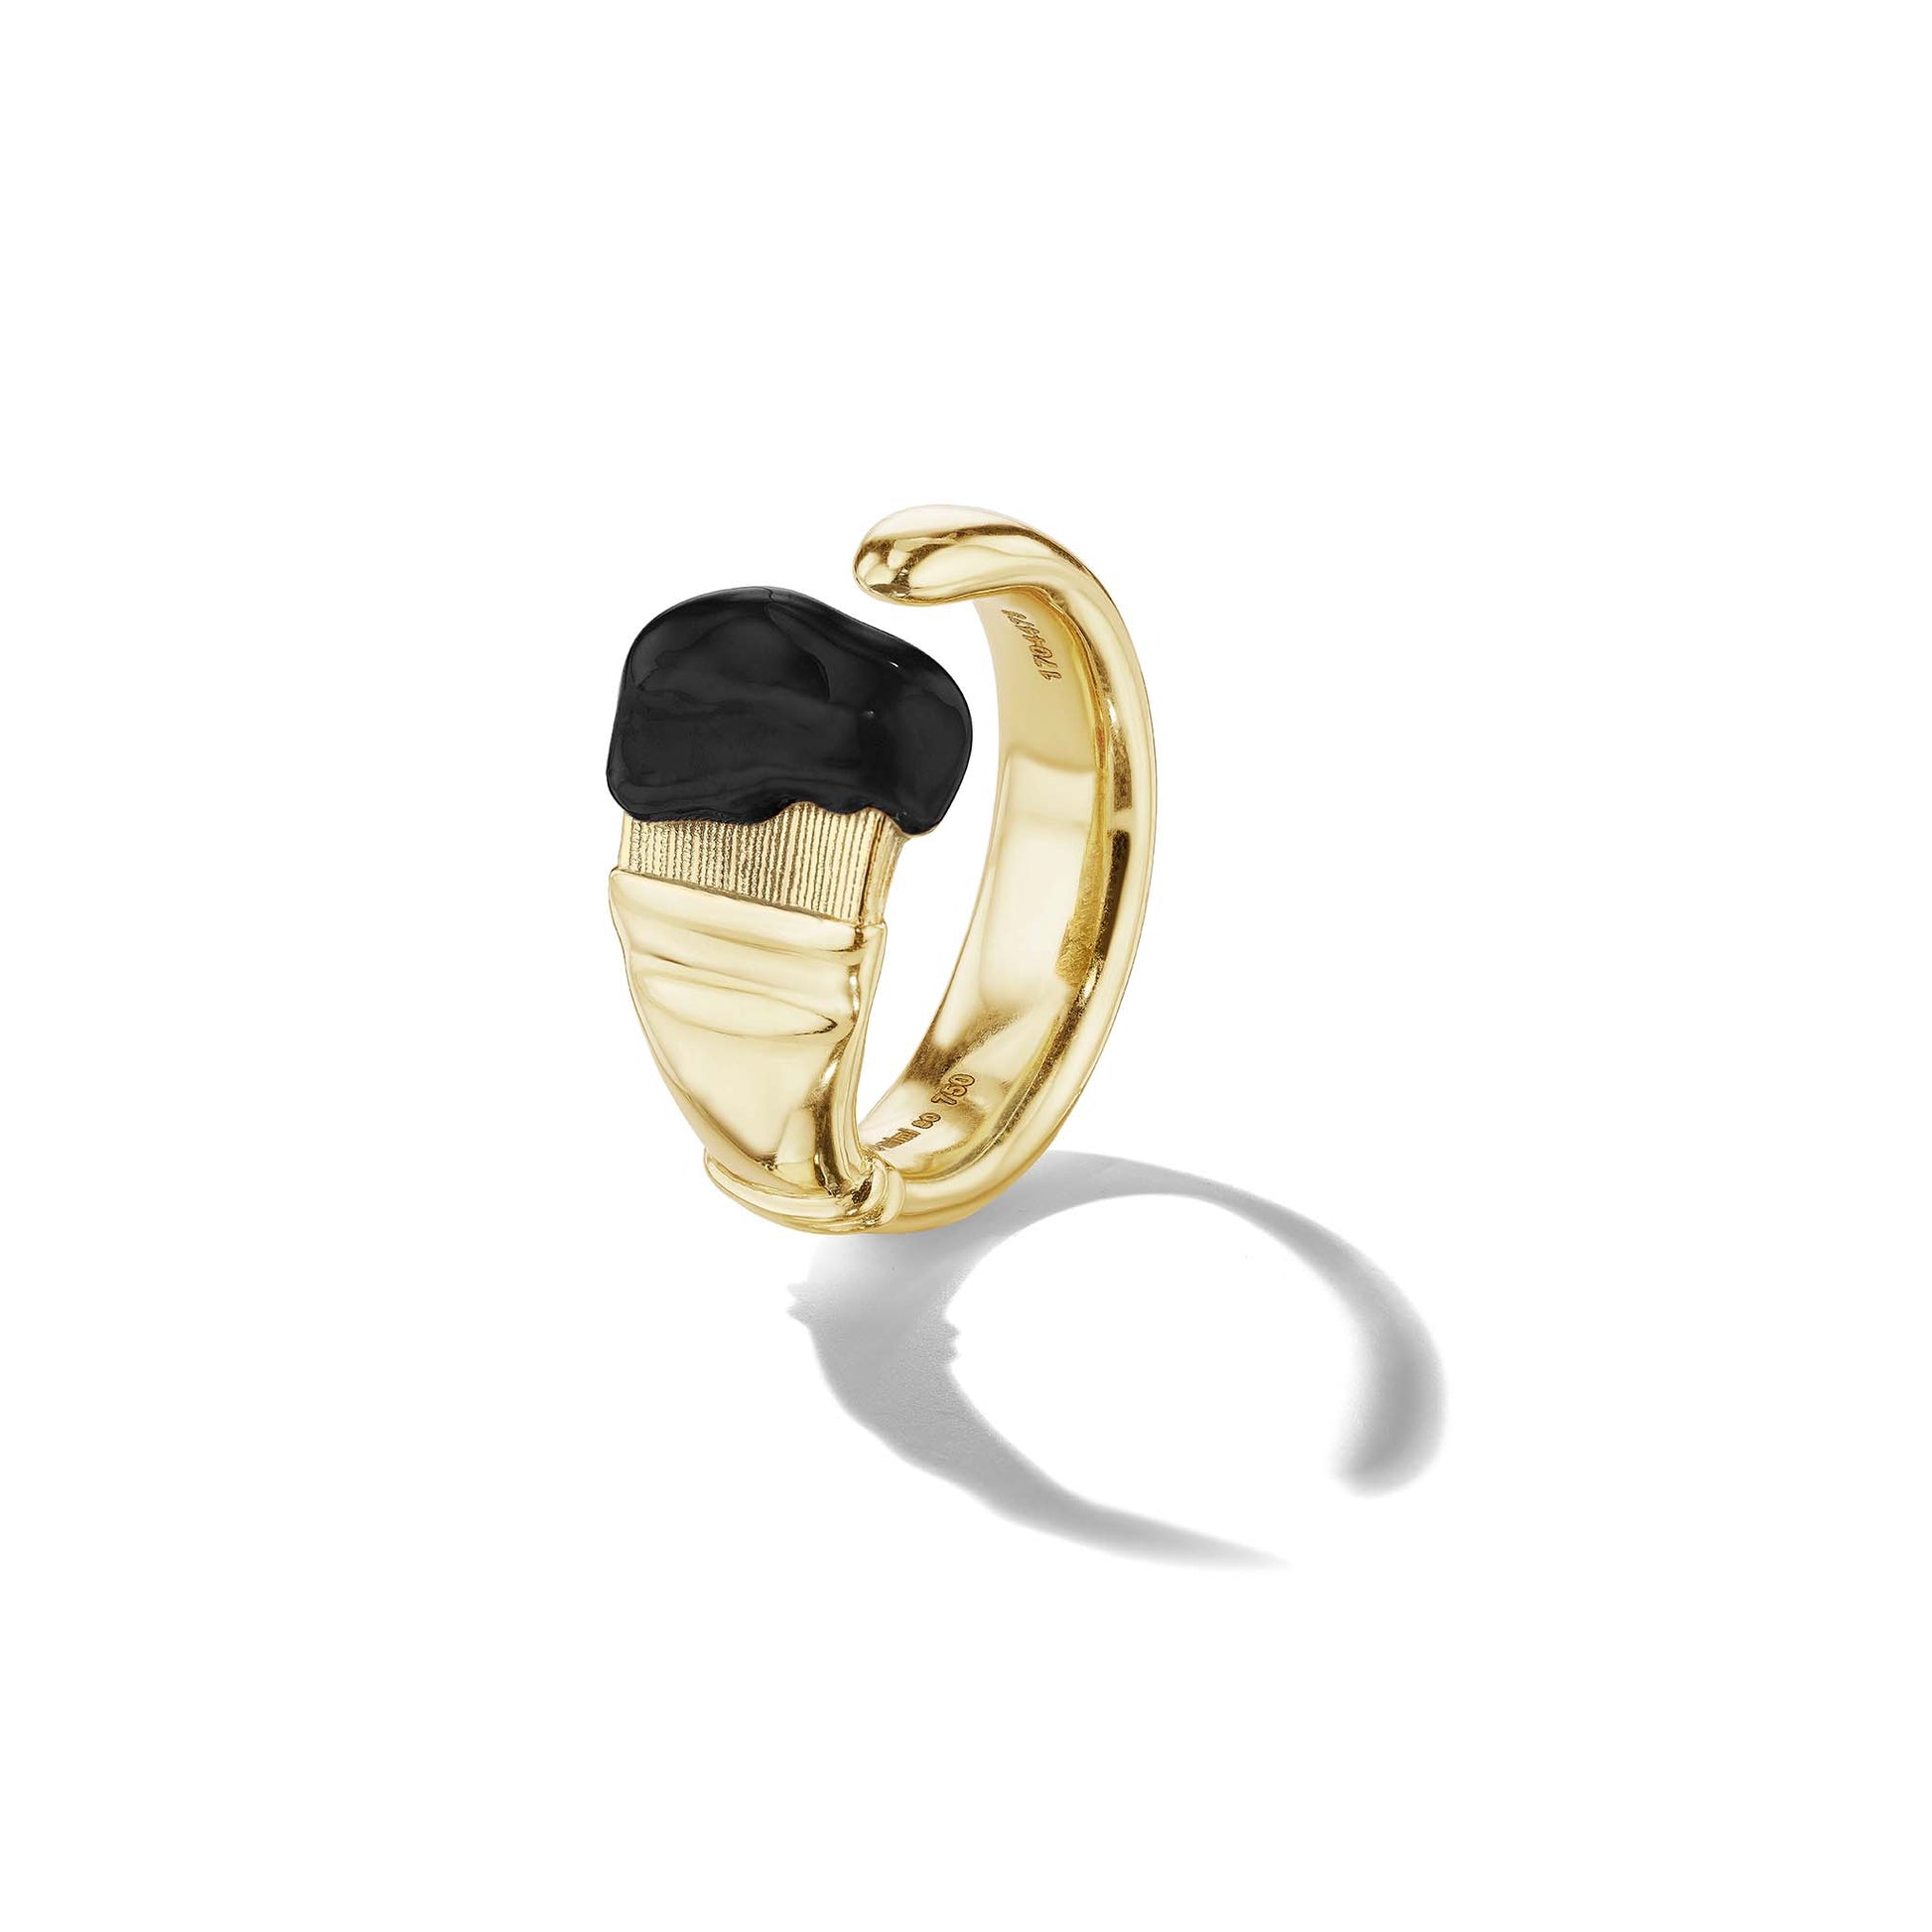 Mimi So Large Parsons Black Enamel Ring in 18k Yellow Gold